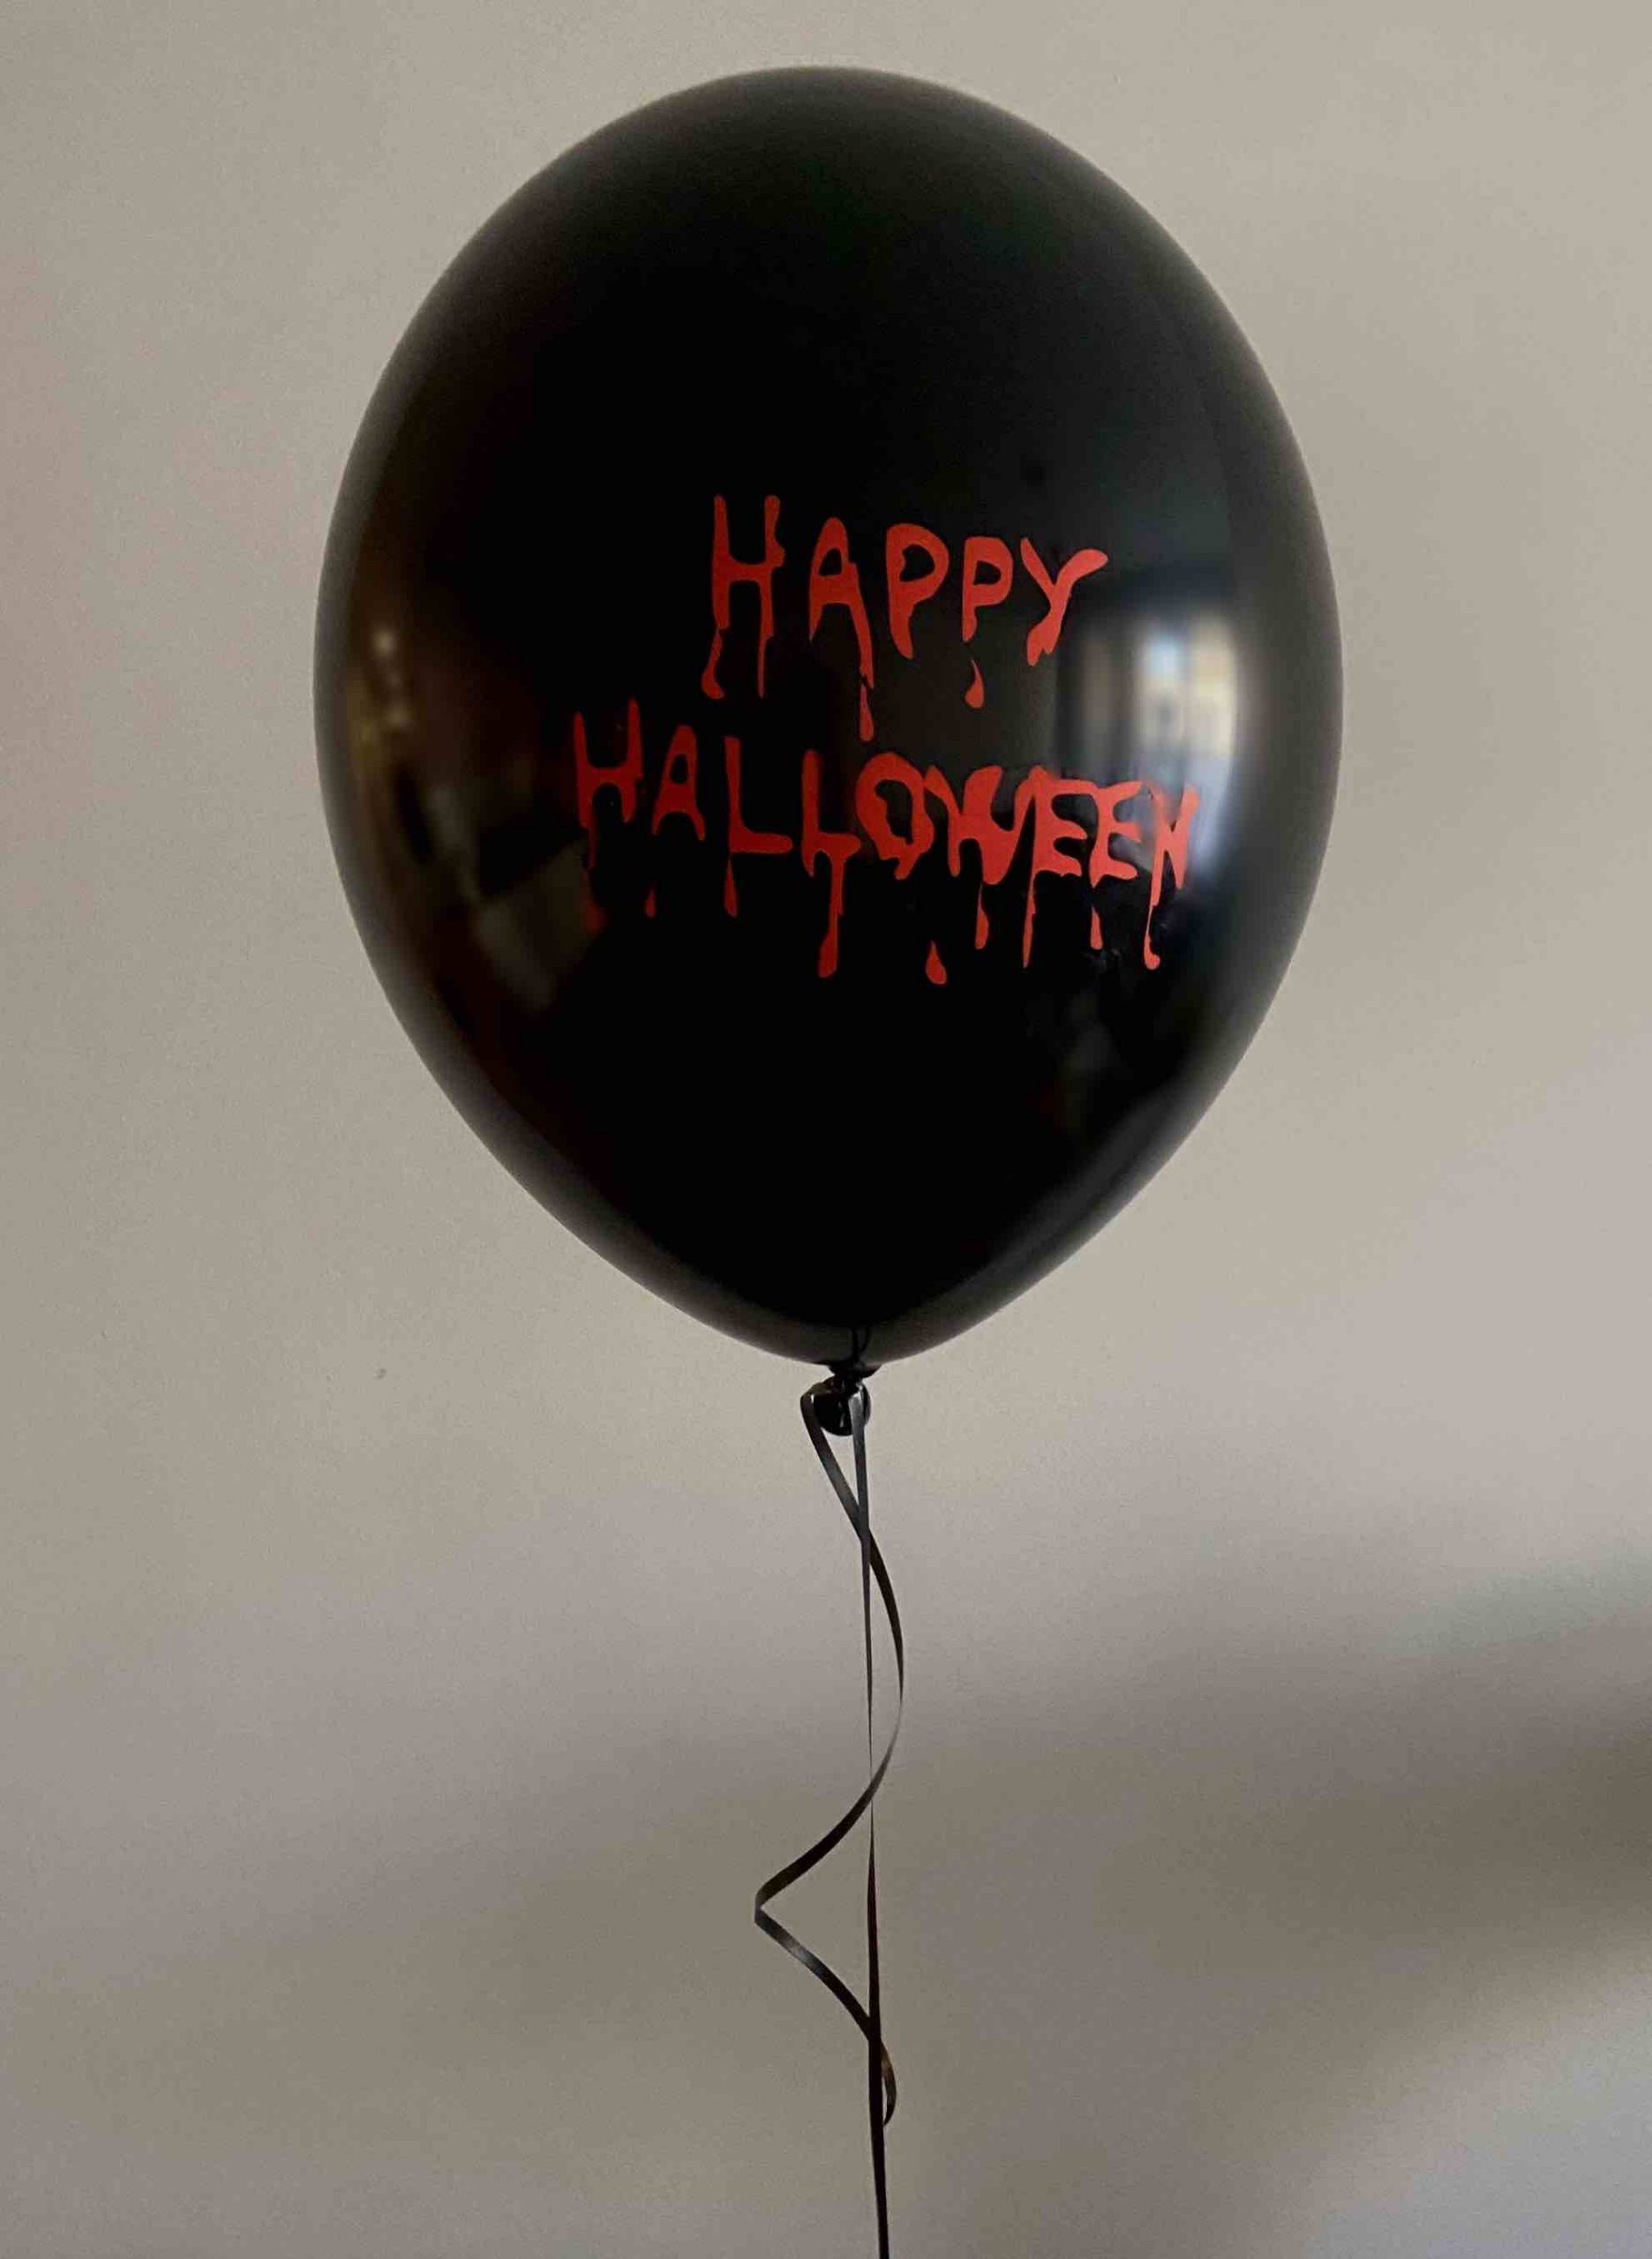 Balon z napisem „Happy Halloween”